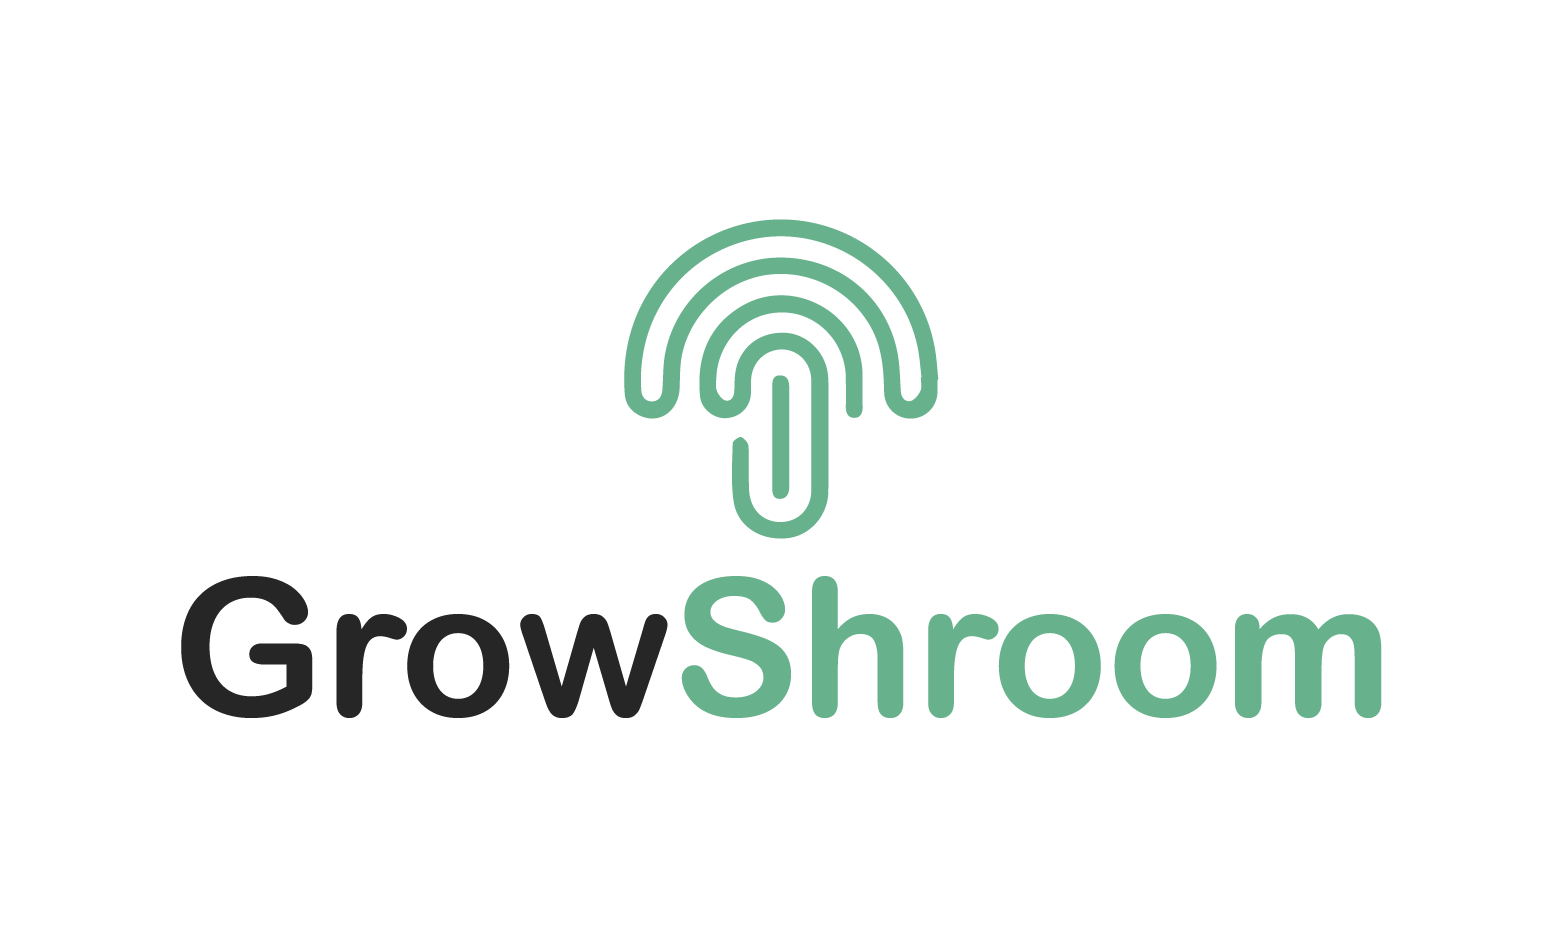 GrowShroom.com - Creative brandable domain for sale